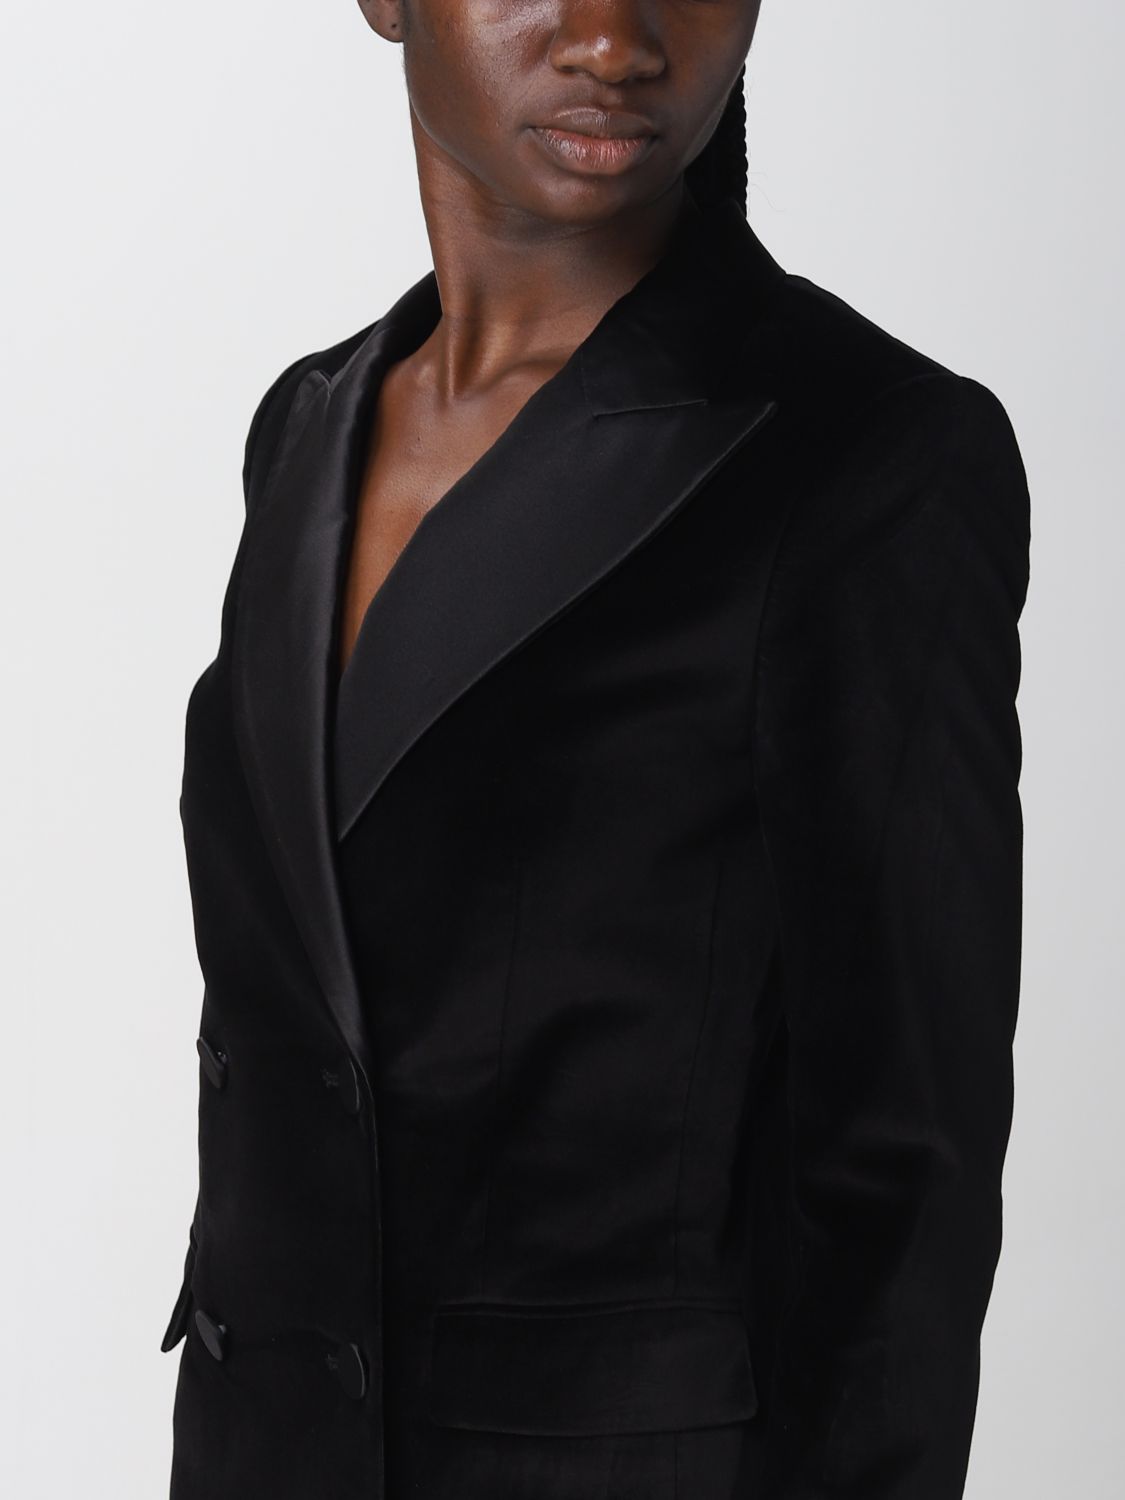 MICHAEL KORS: blazer for woman - Black | Michael Kors blazer MF2103Y6LN  online on 